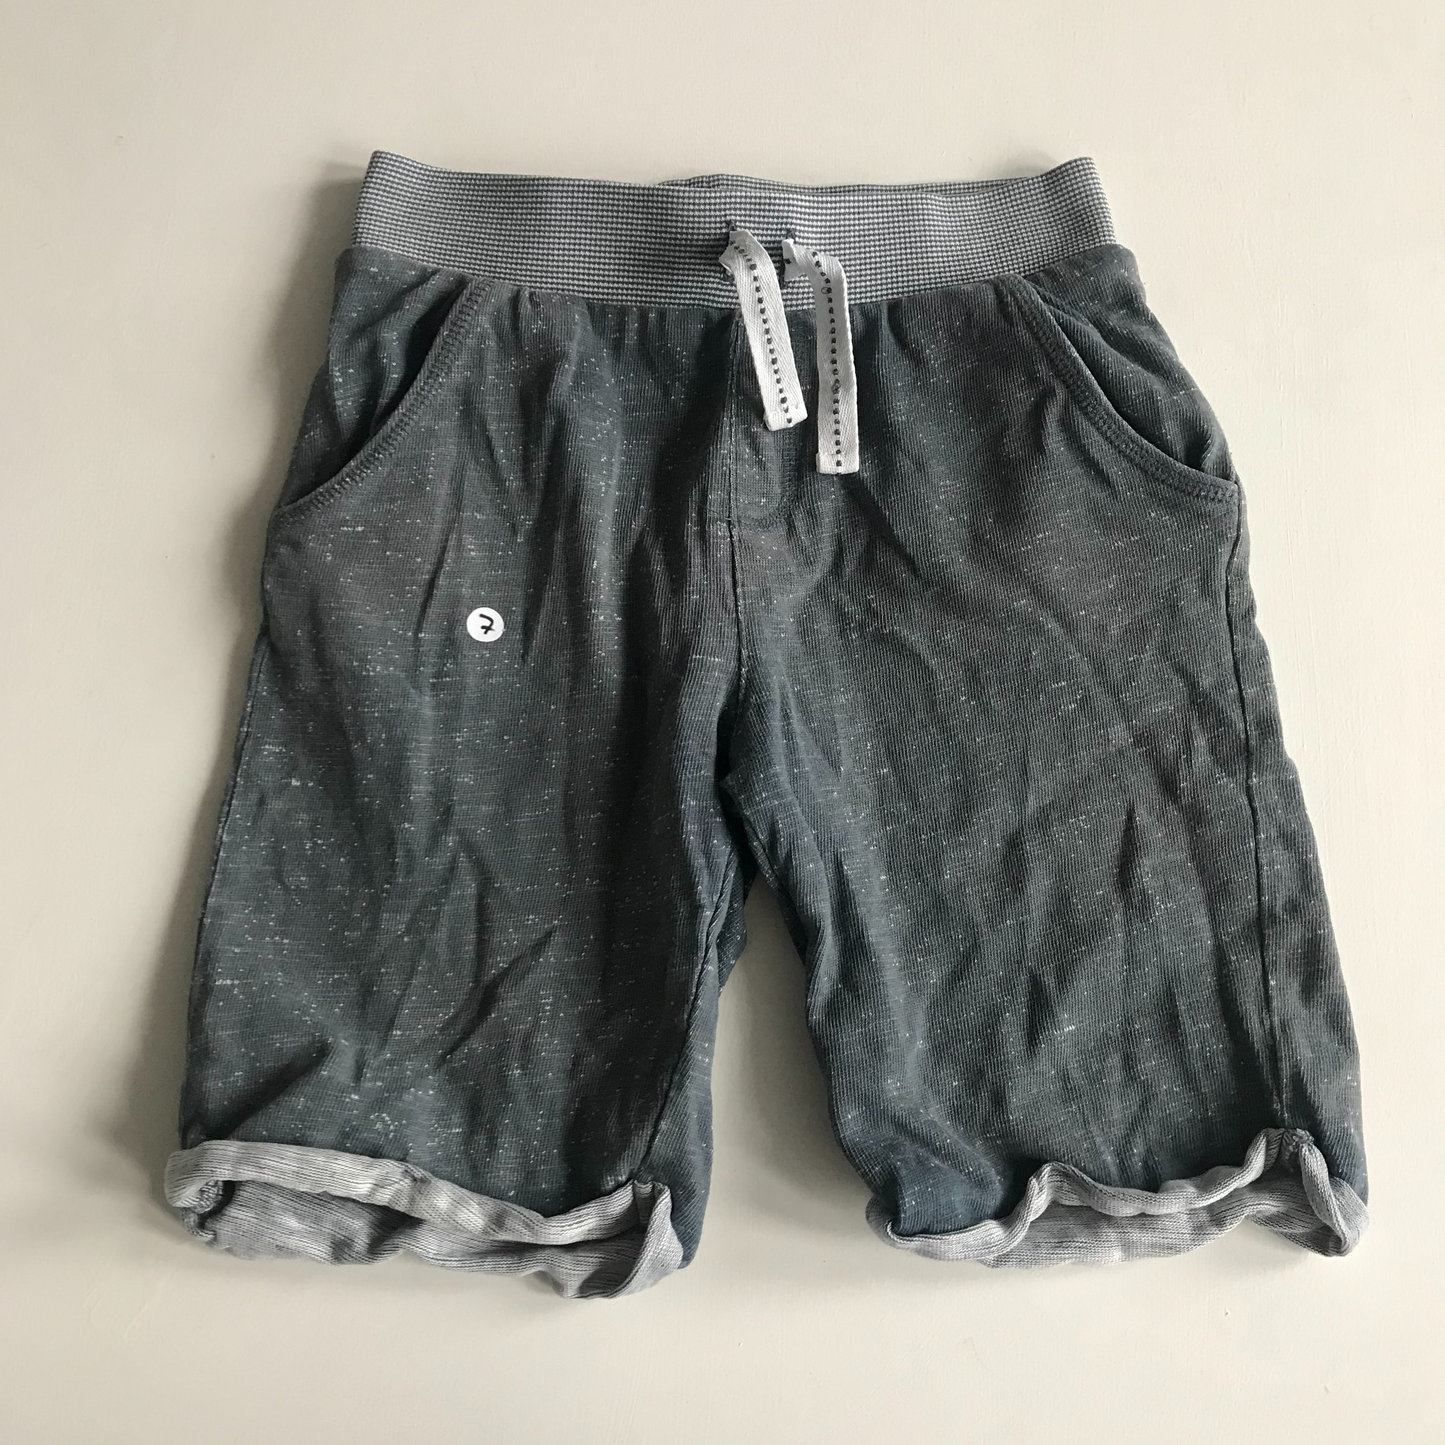 Shorts - Grey Jersey - Age 7